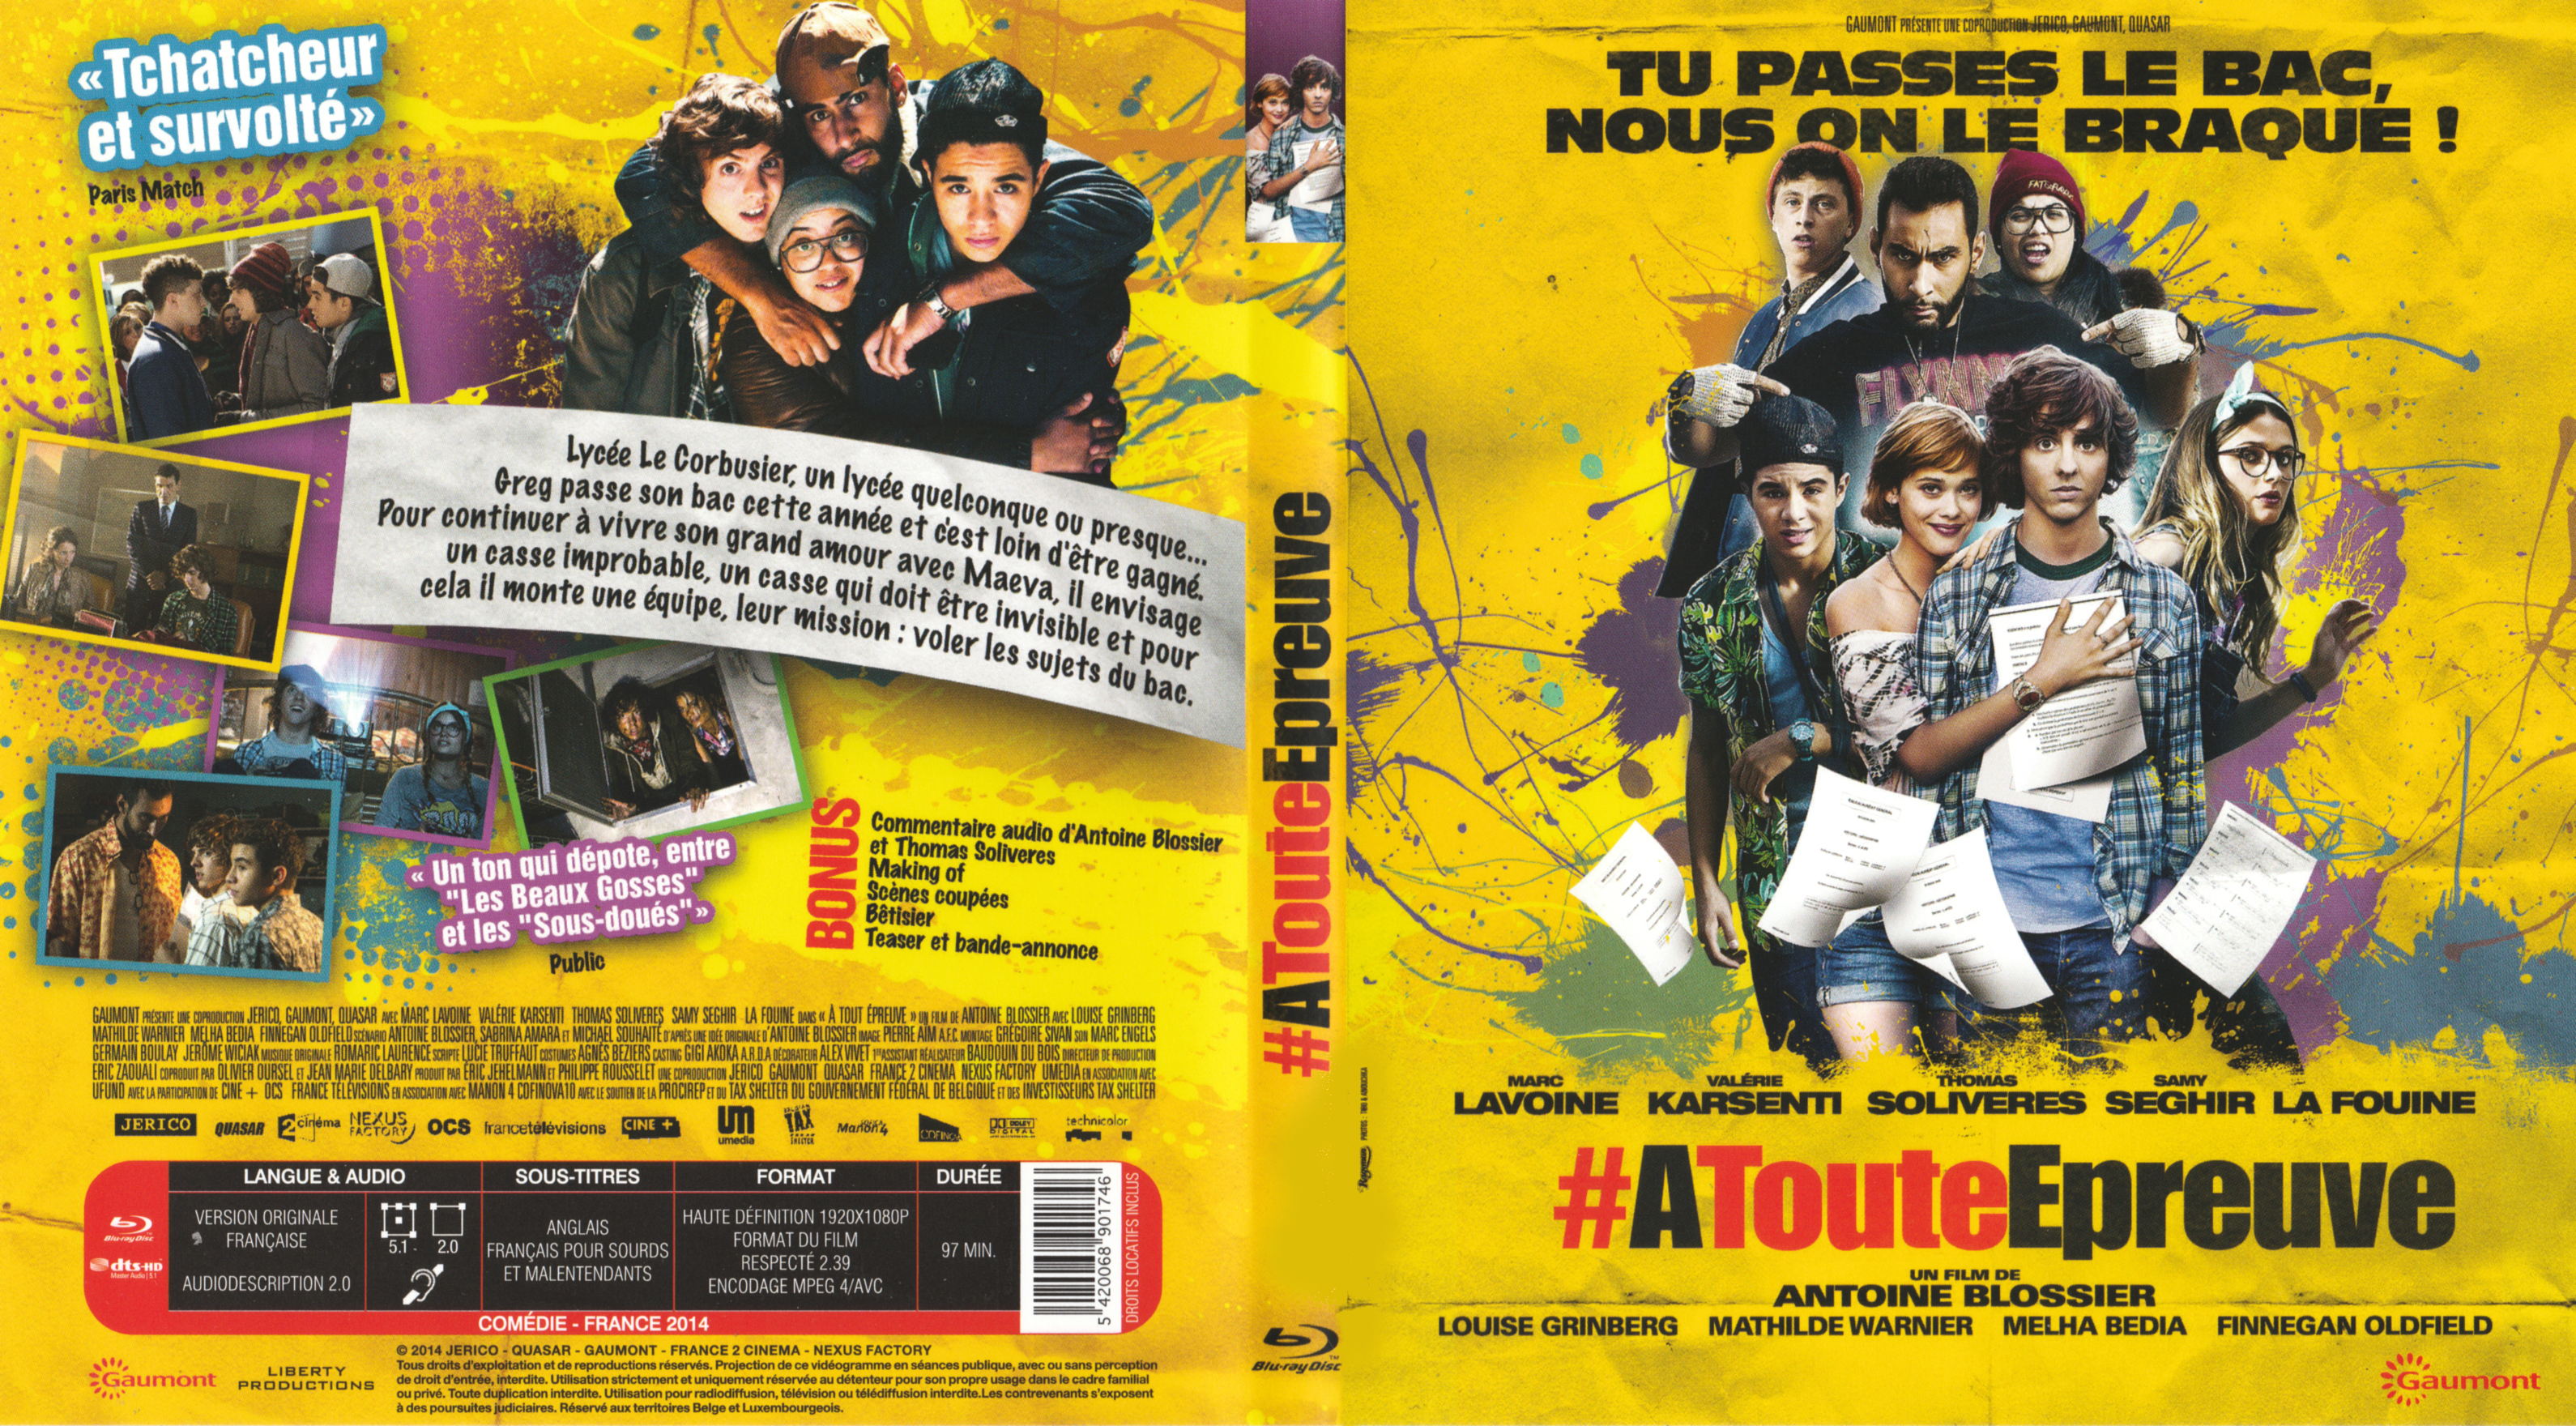 Jaquette DVD A toute epreuve (2014) (BLU-RAY) v2